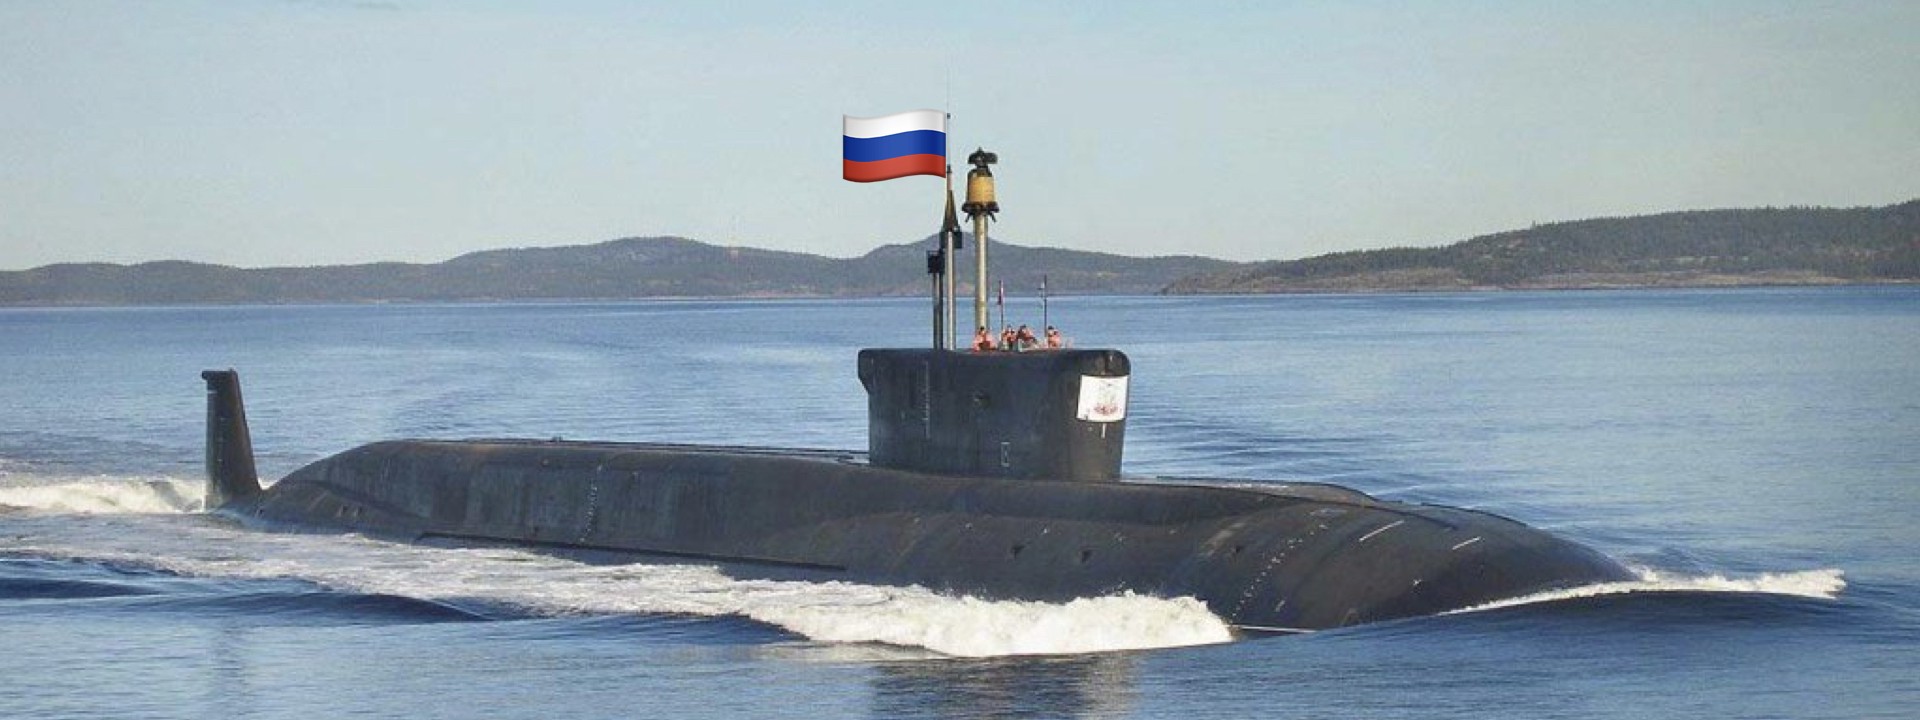 #MeanwhileInTheArctic: Prince Vladimir Submarine Sets Sail